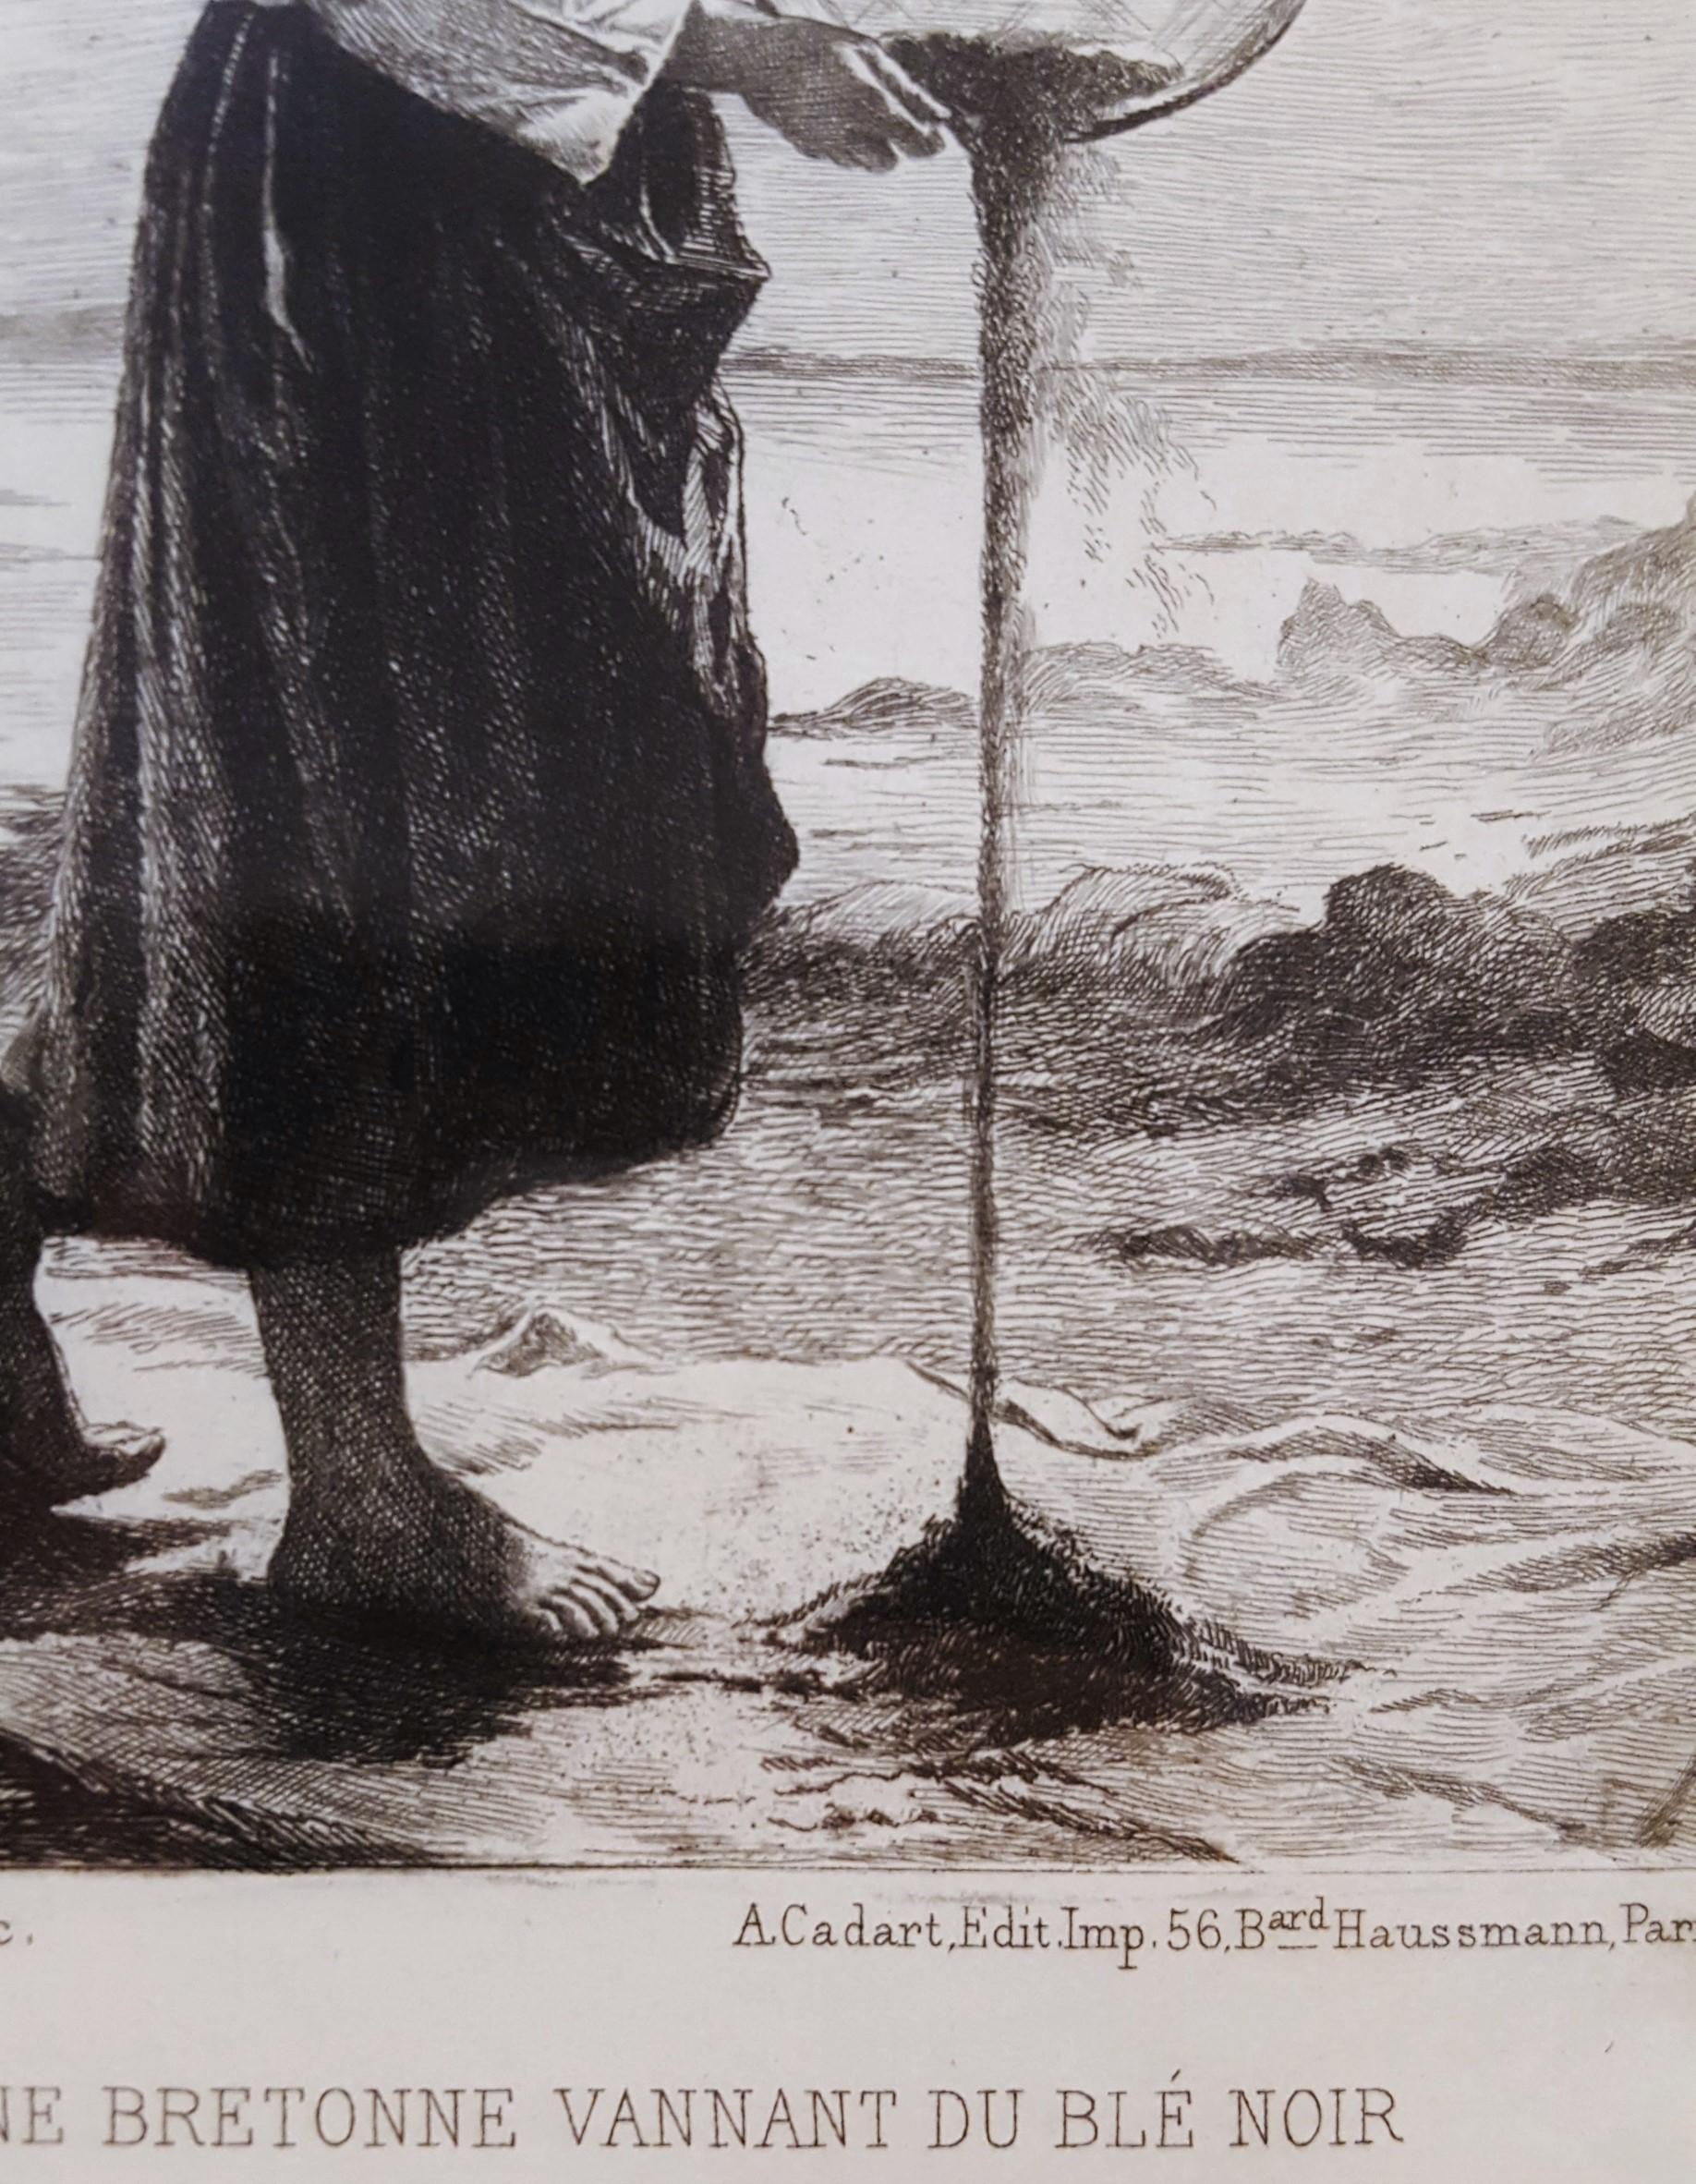 Young Bretonne Winnowing Buckwheat by the Sea 1